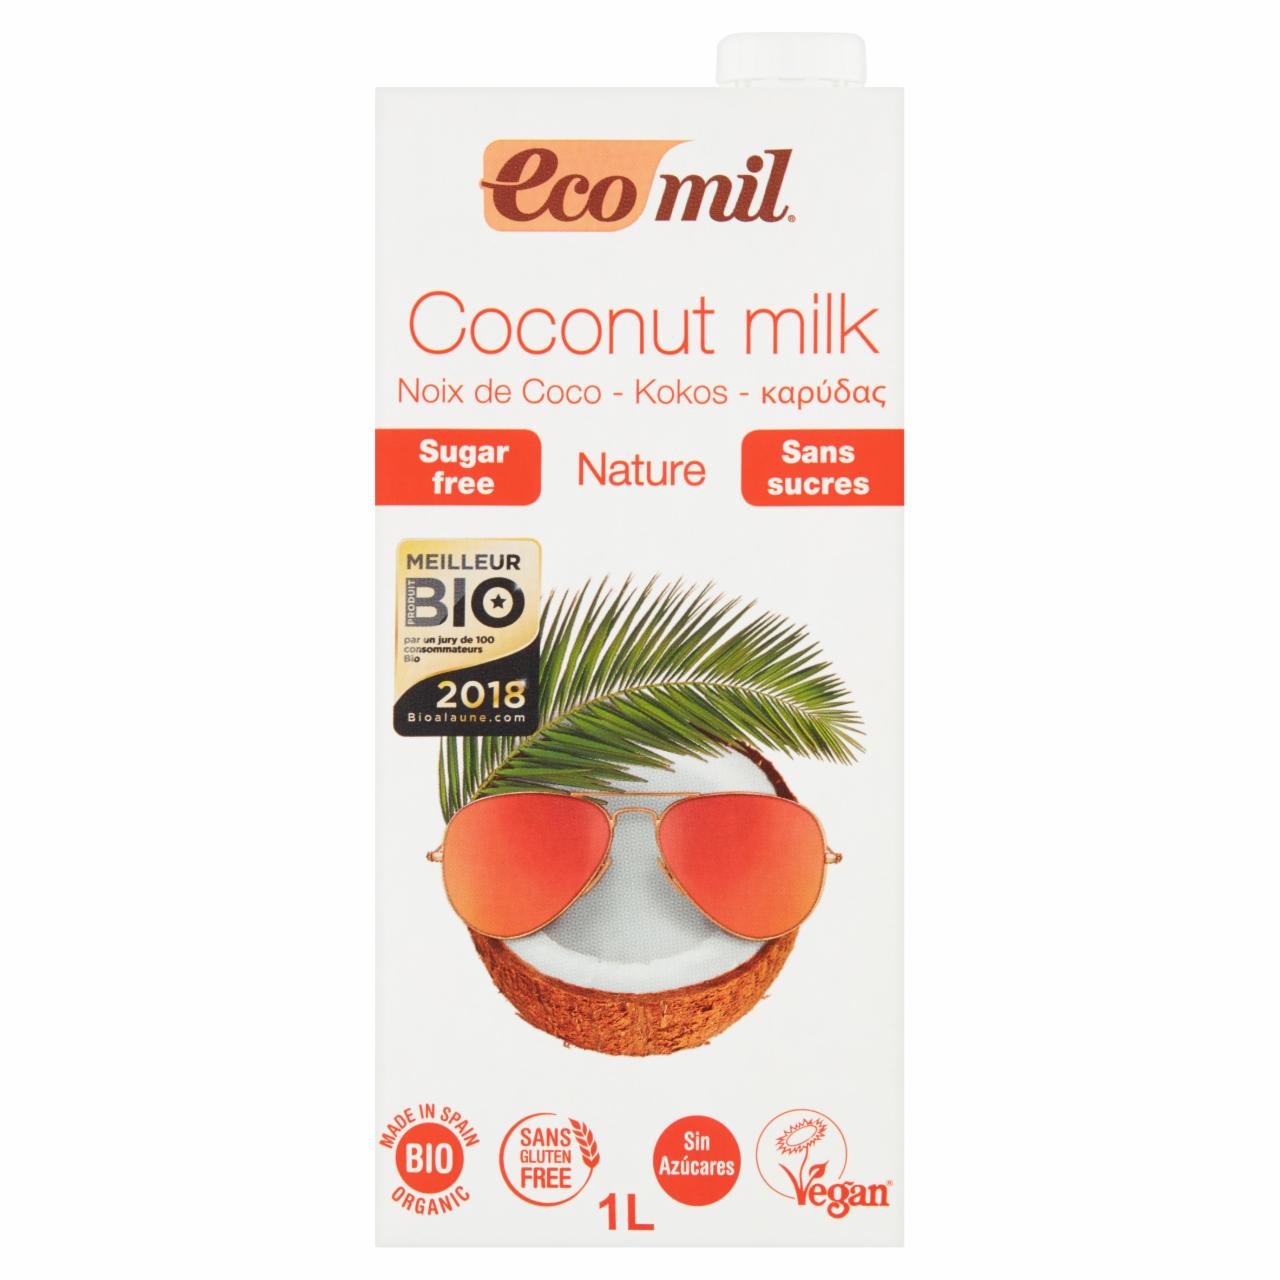 Fotografie - Ecomil coconut milk nature sugar free